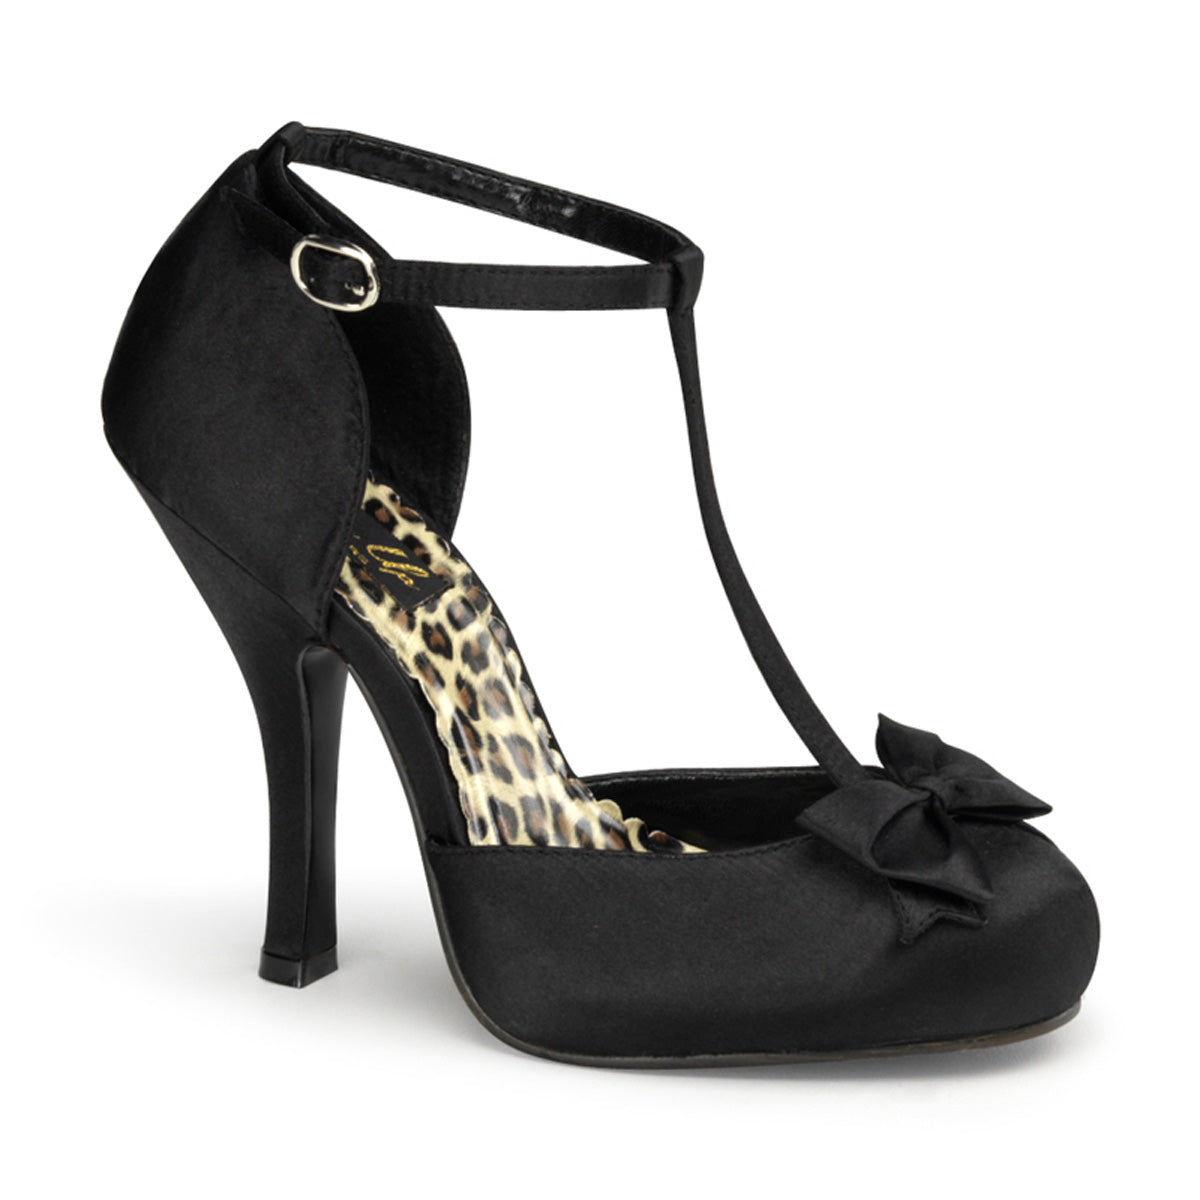 CUTIEPIE-12 Pin Up Glamour 4.5" Heel Black Satin Shoes